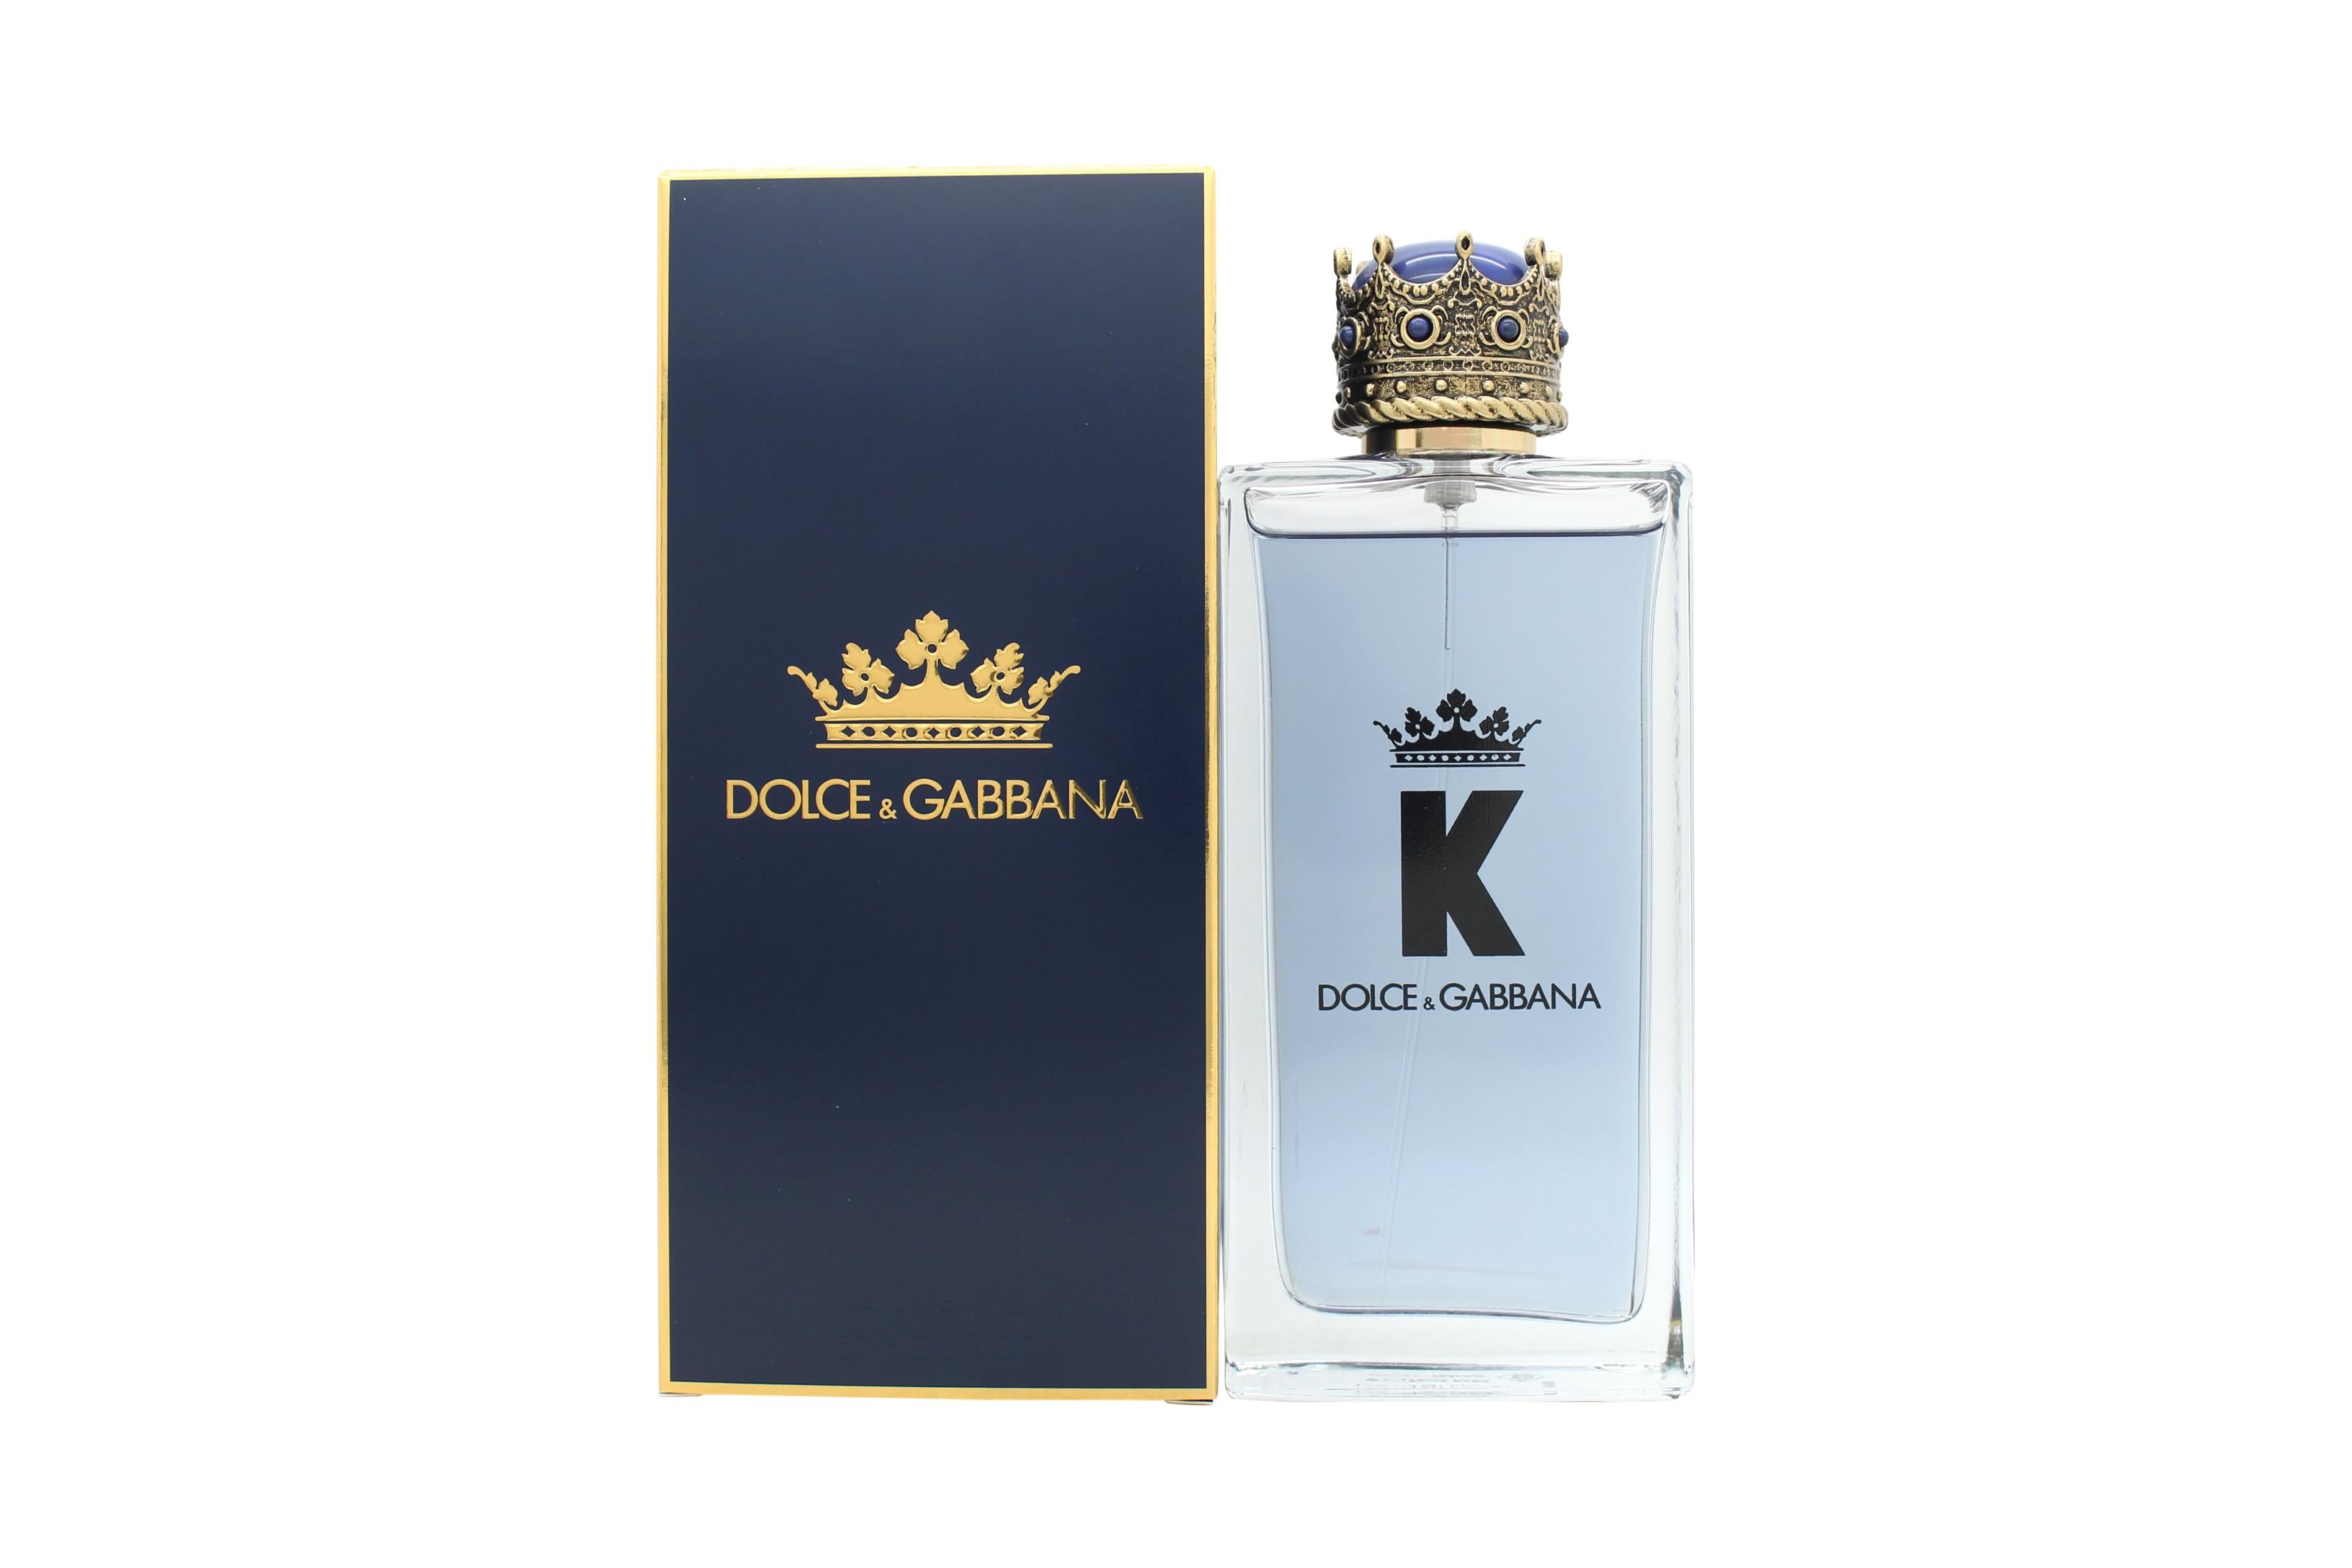 View Dolce Gabbana K Eau de Toilette 150ml Spray information